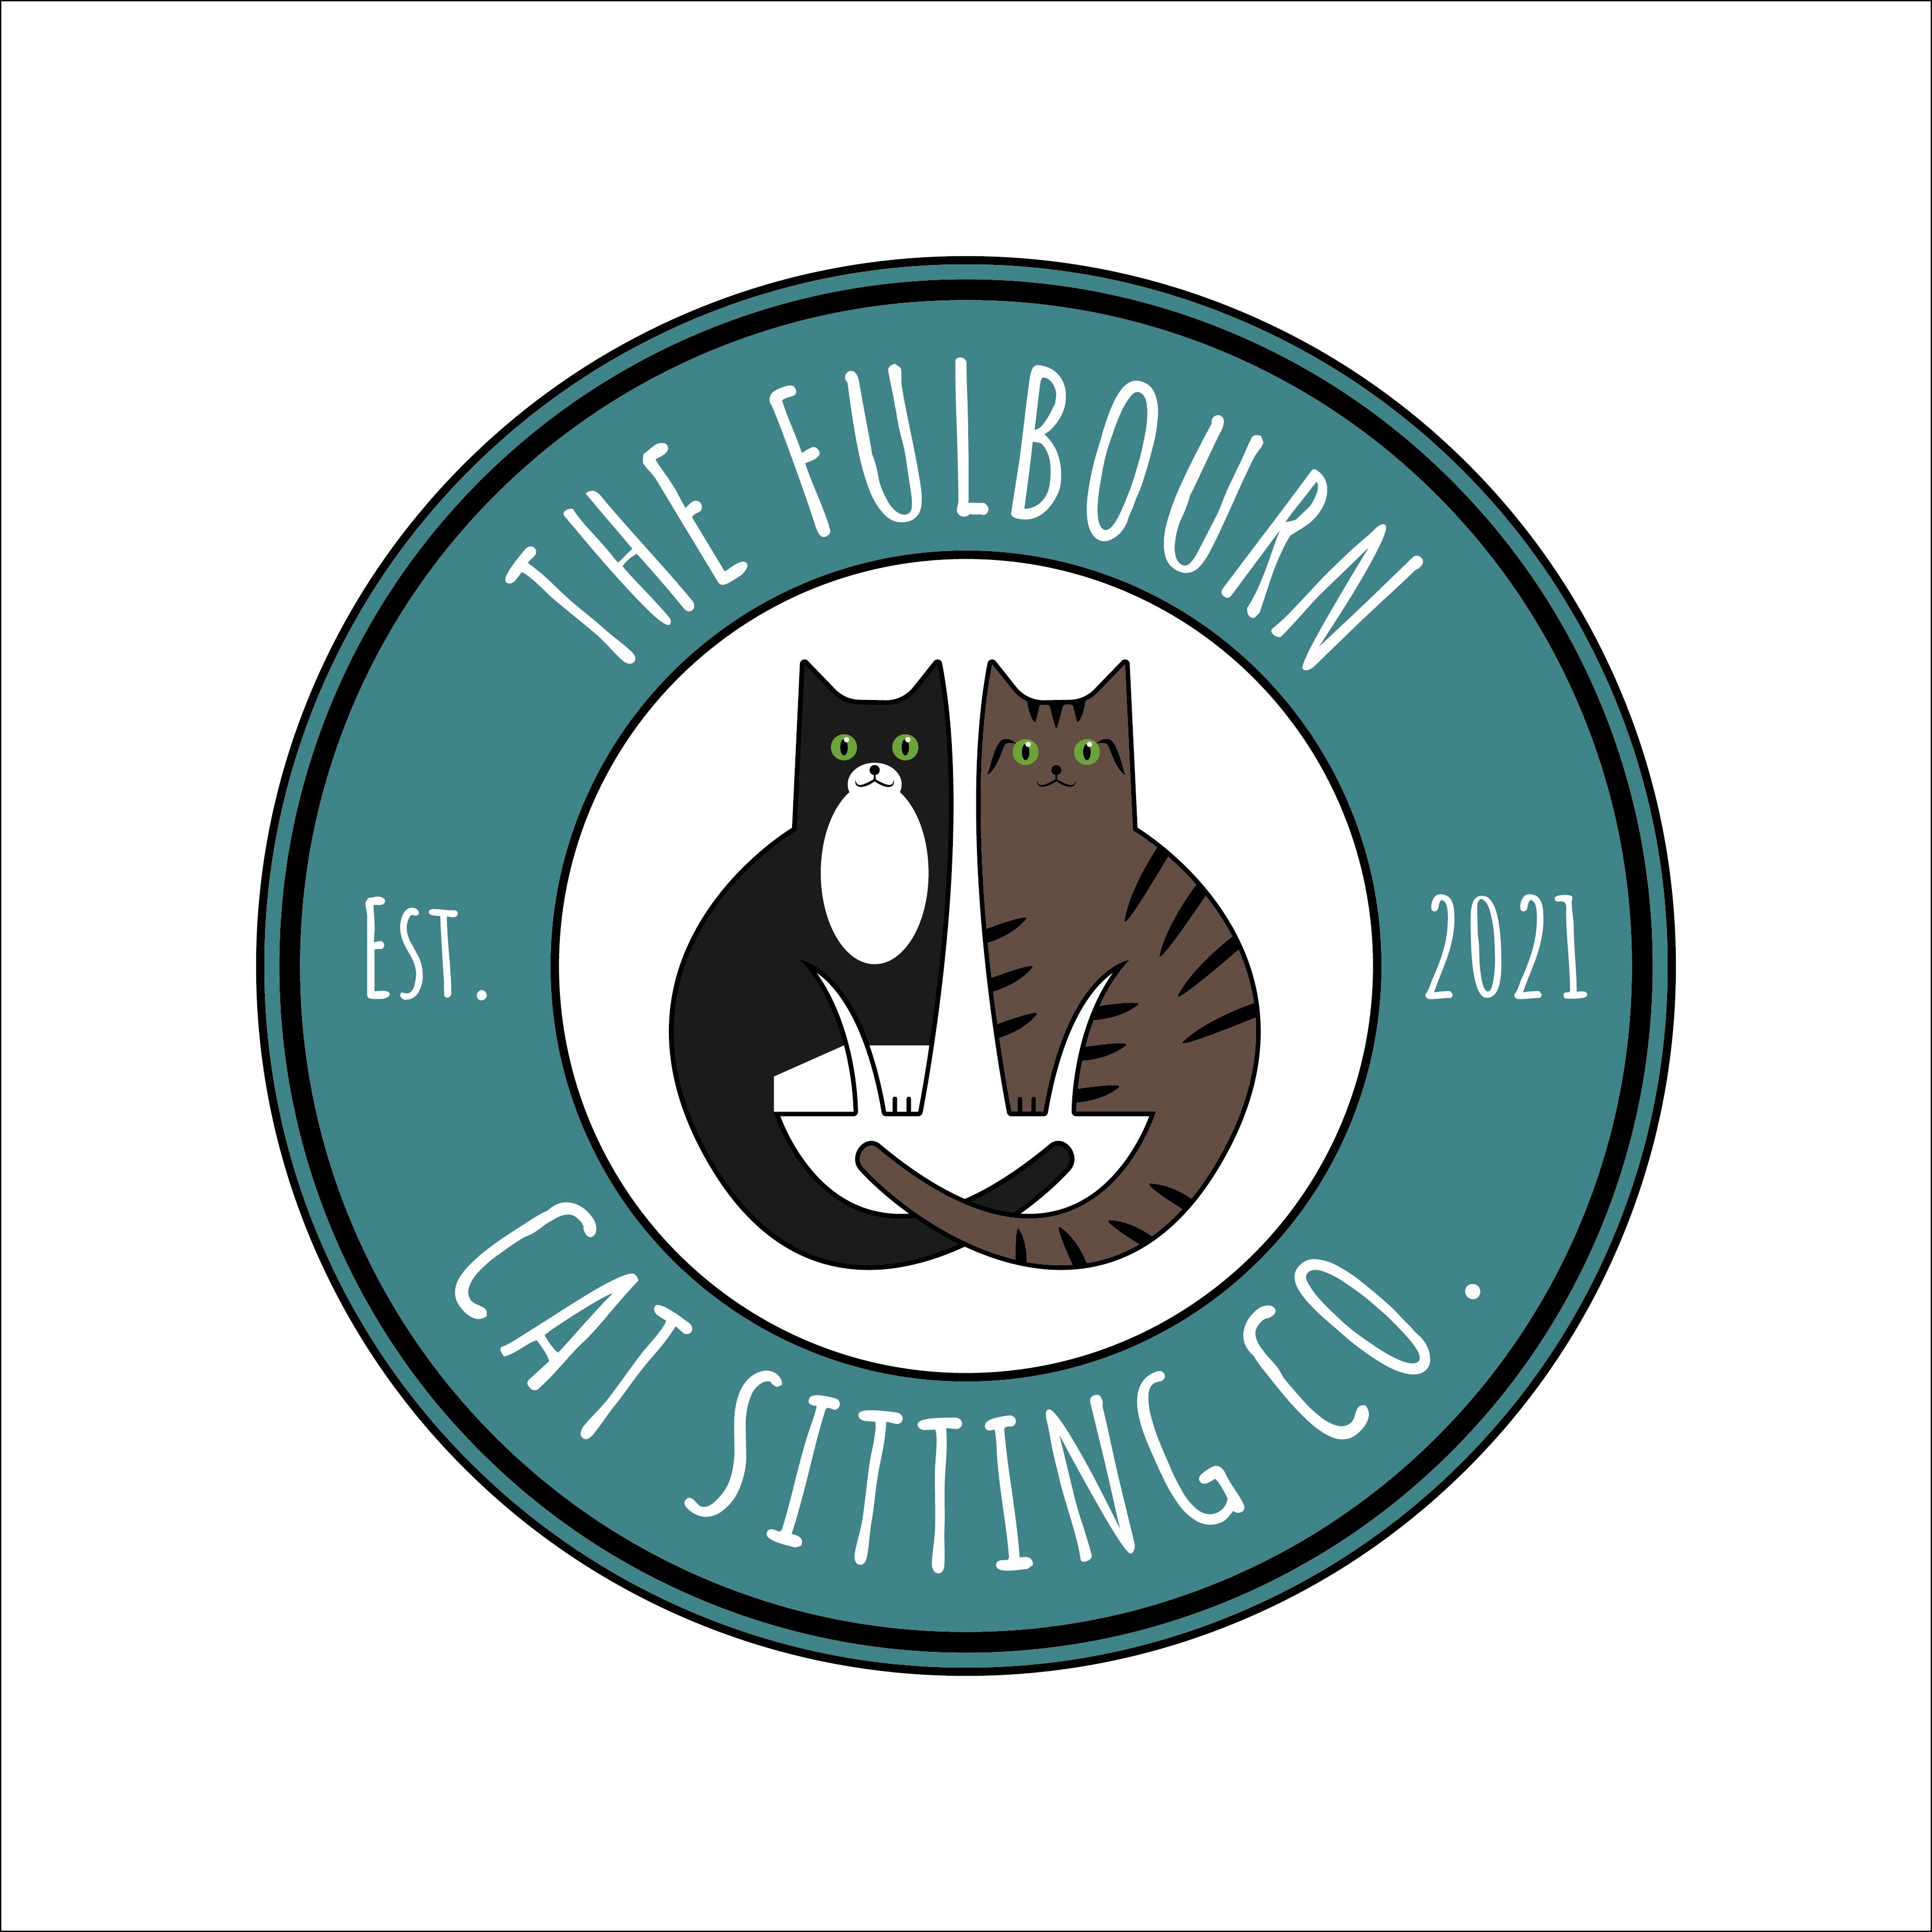 The Fulbourn Cat Sitting Company Logo